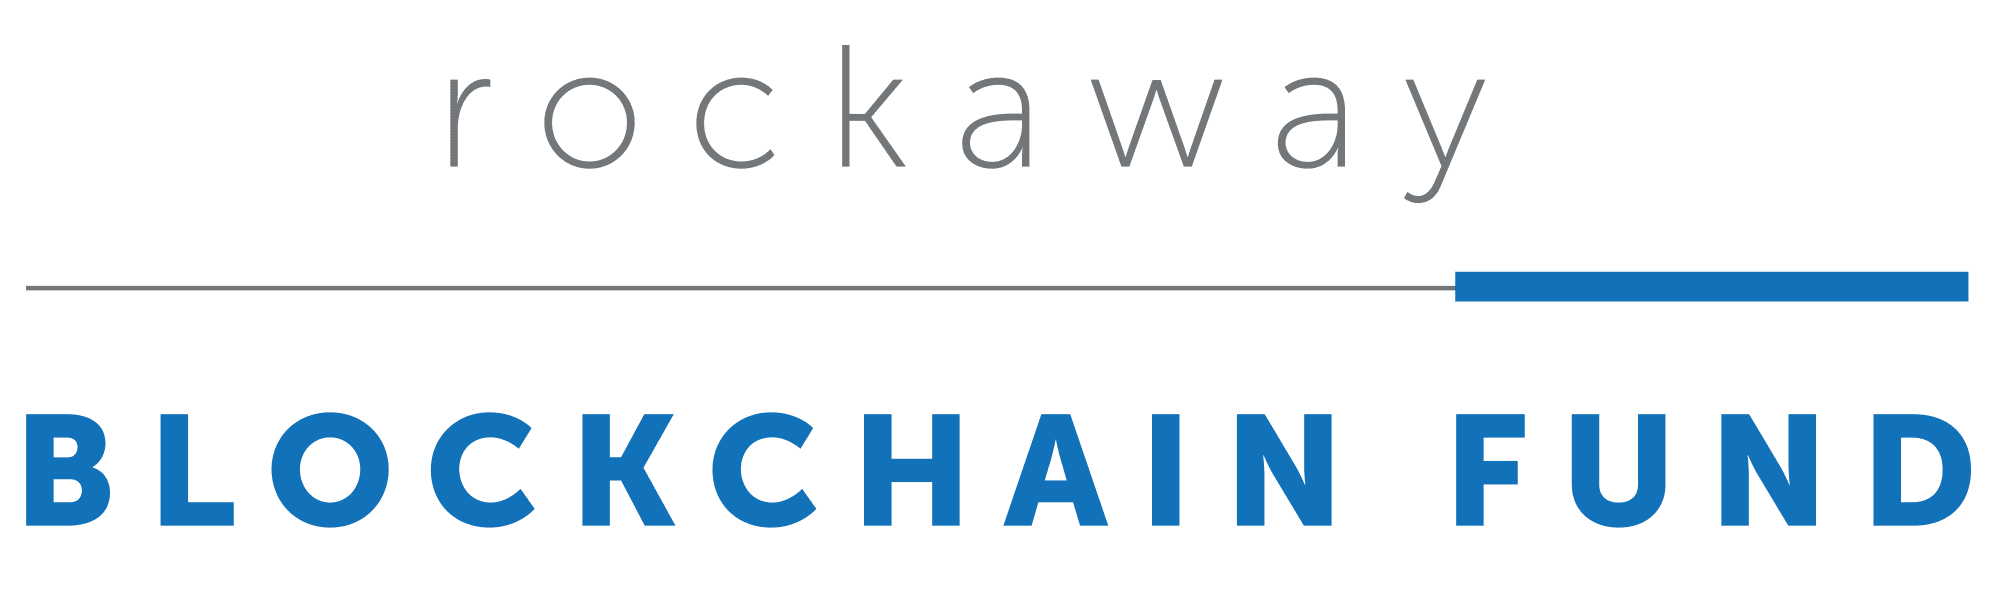 Rockaway Blockchain Fund (RBF)